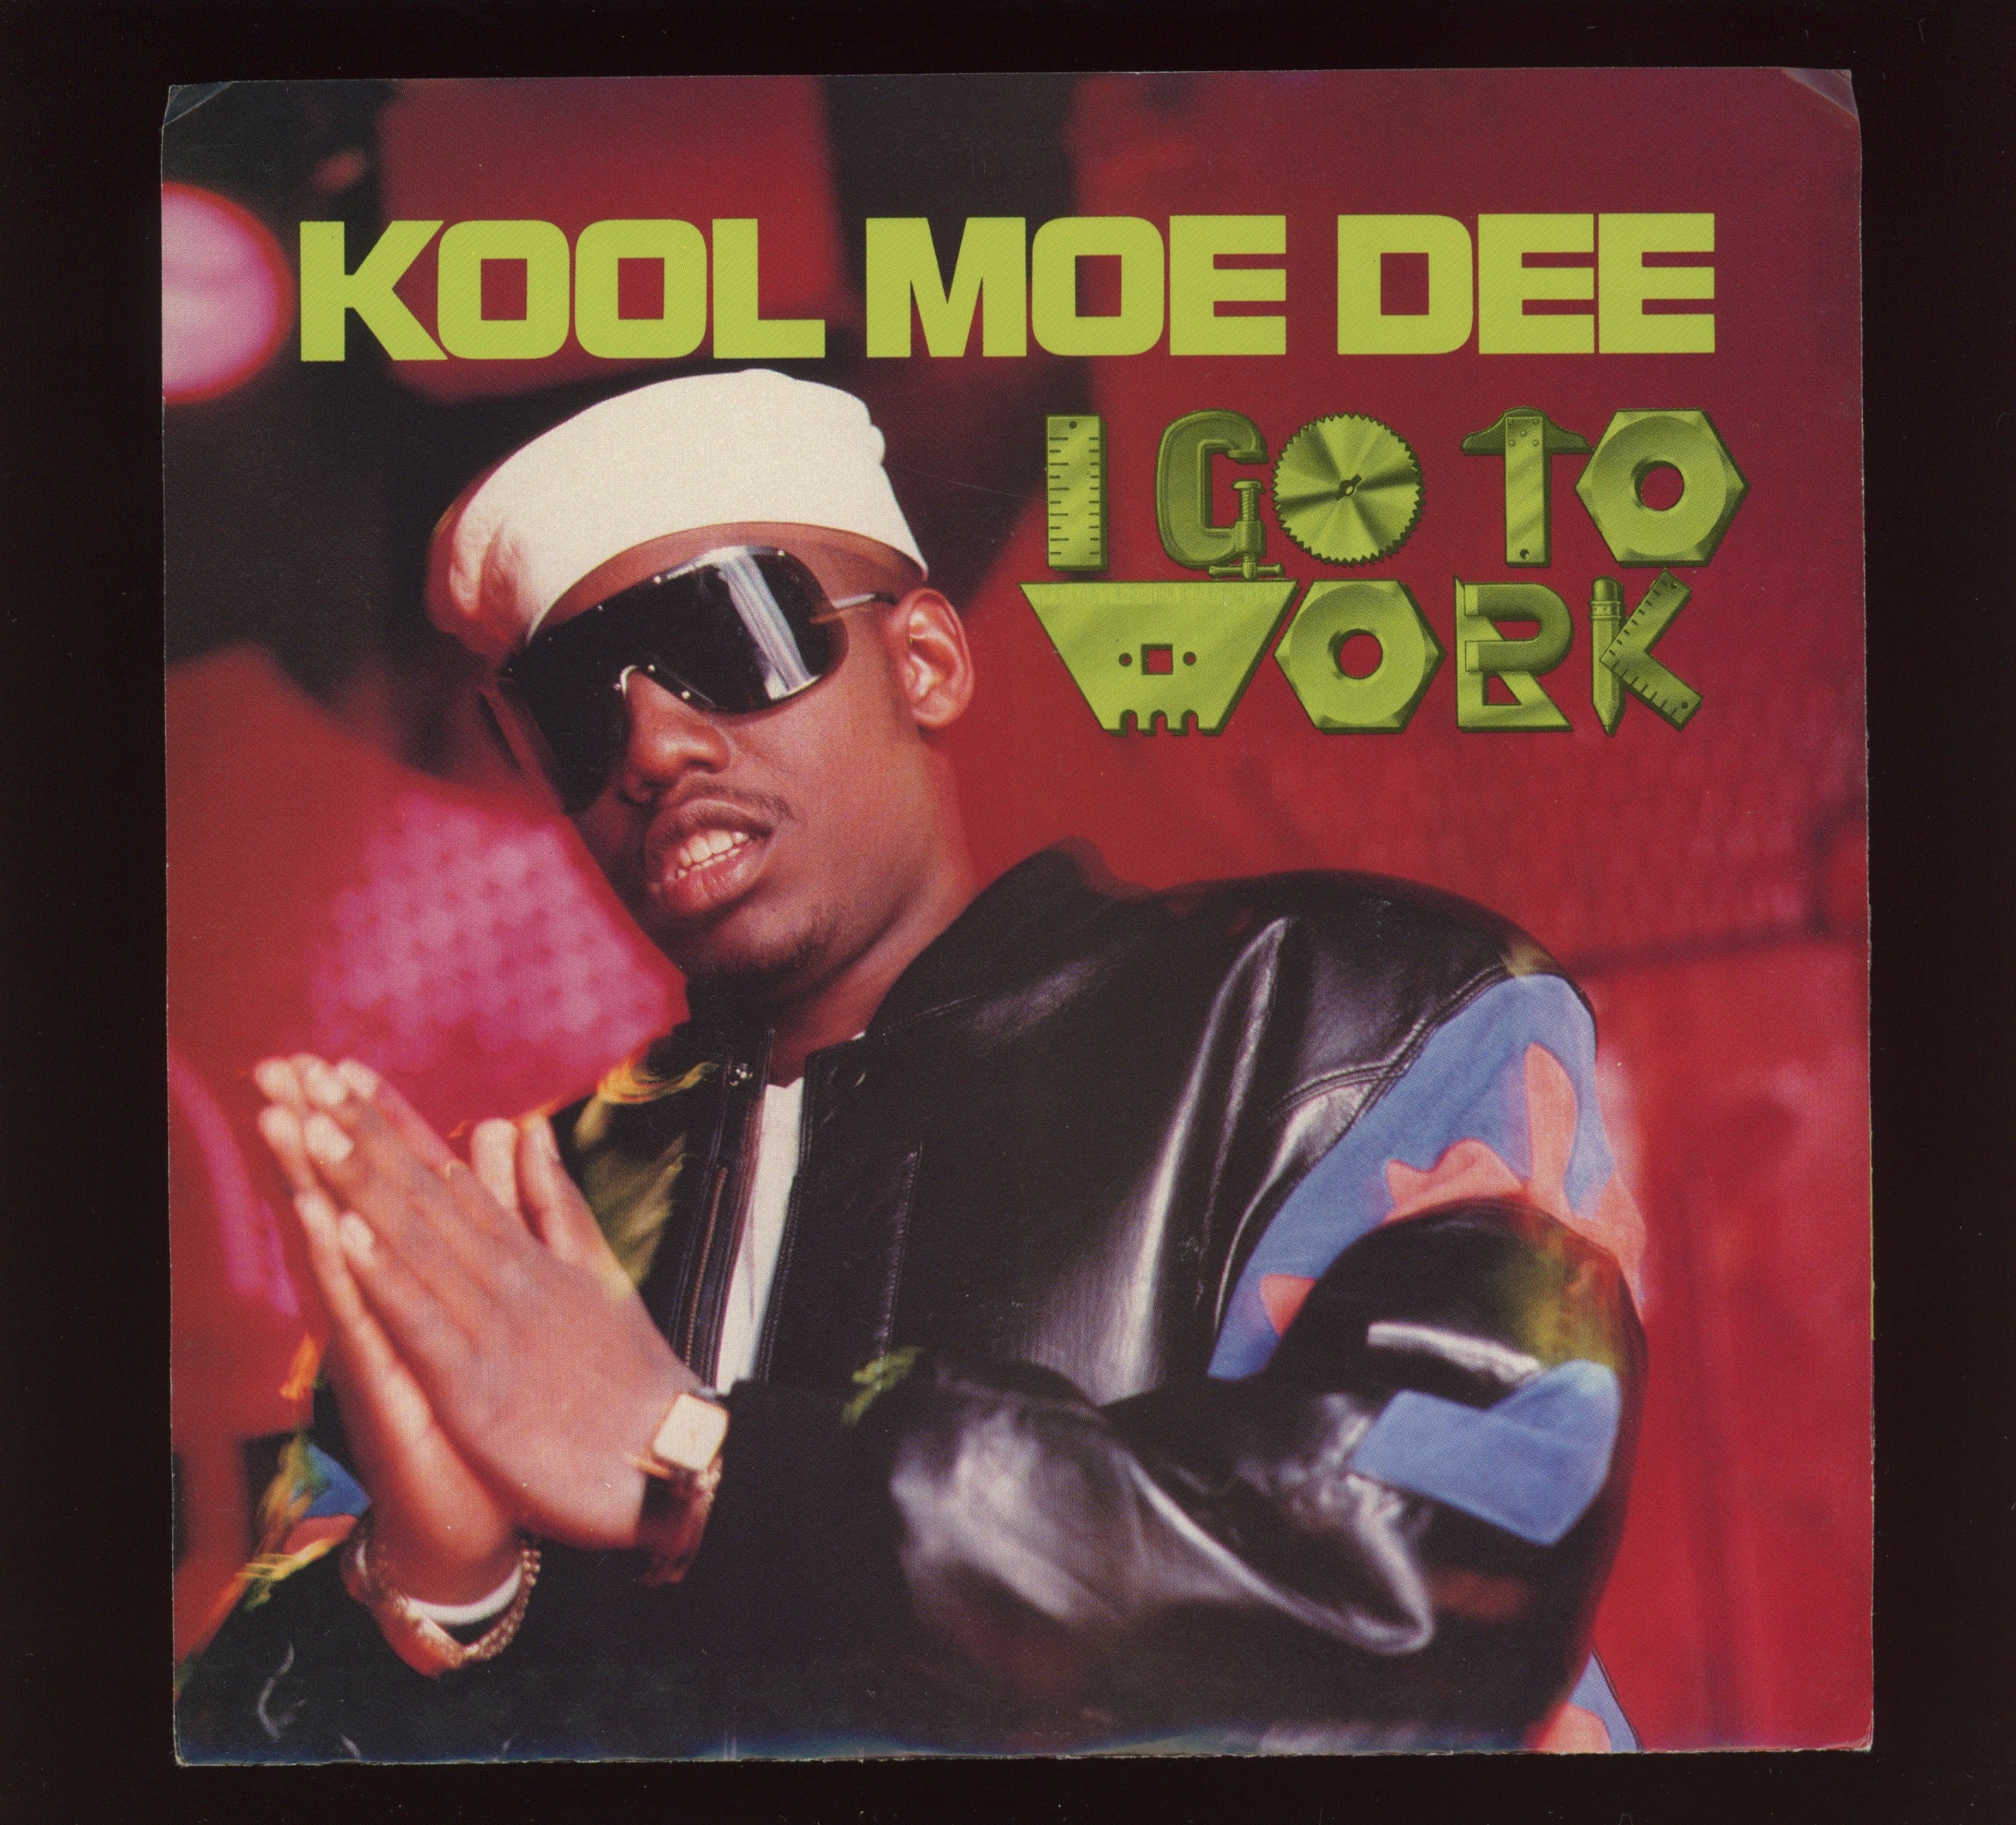 Kool Moe Dee - I Go To Work on Jive With Picture Sleeve